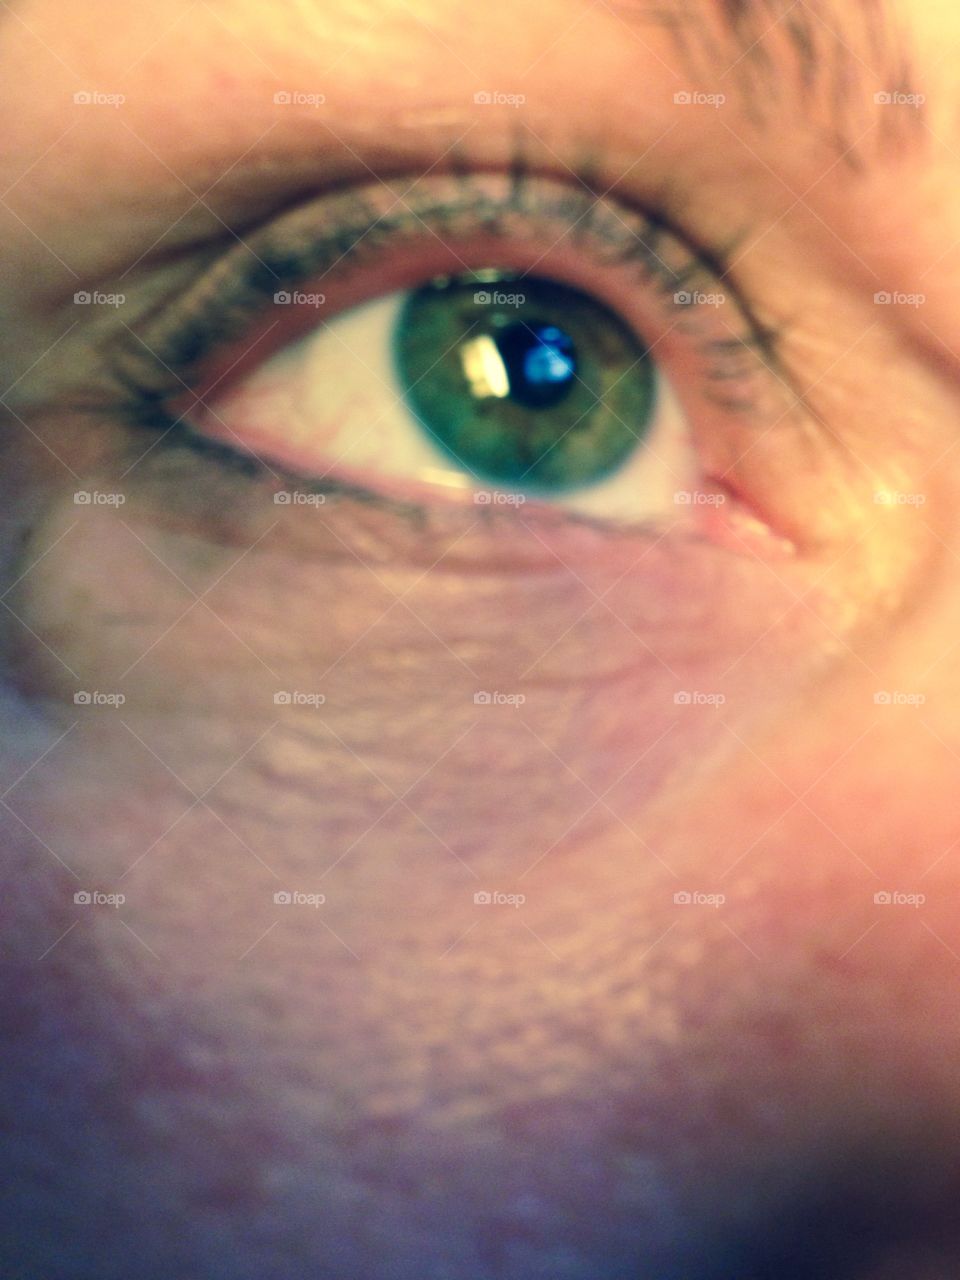 My eye close up